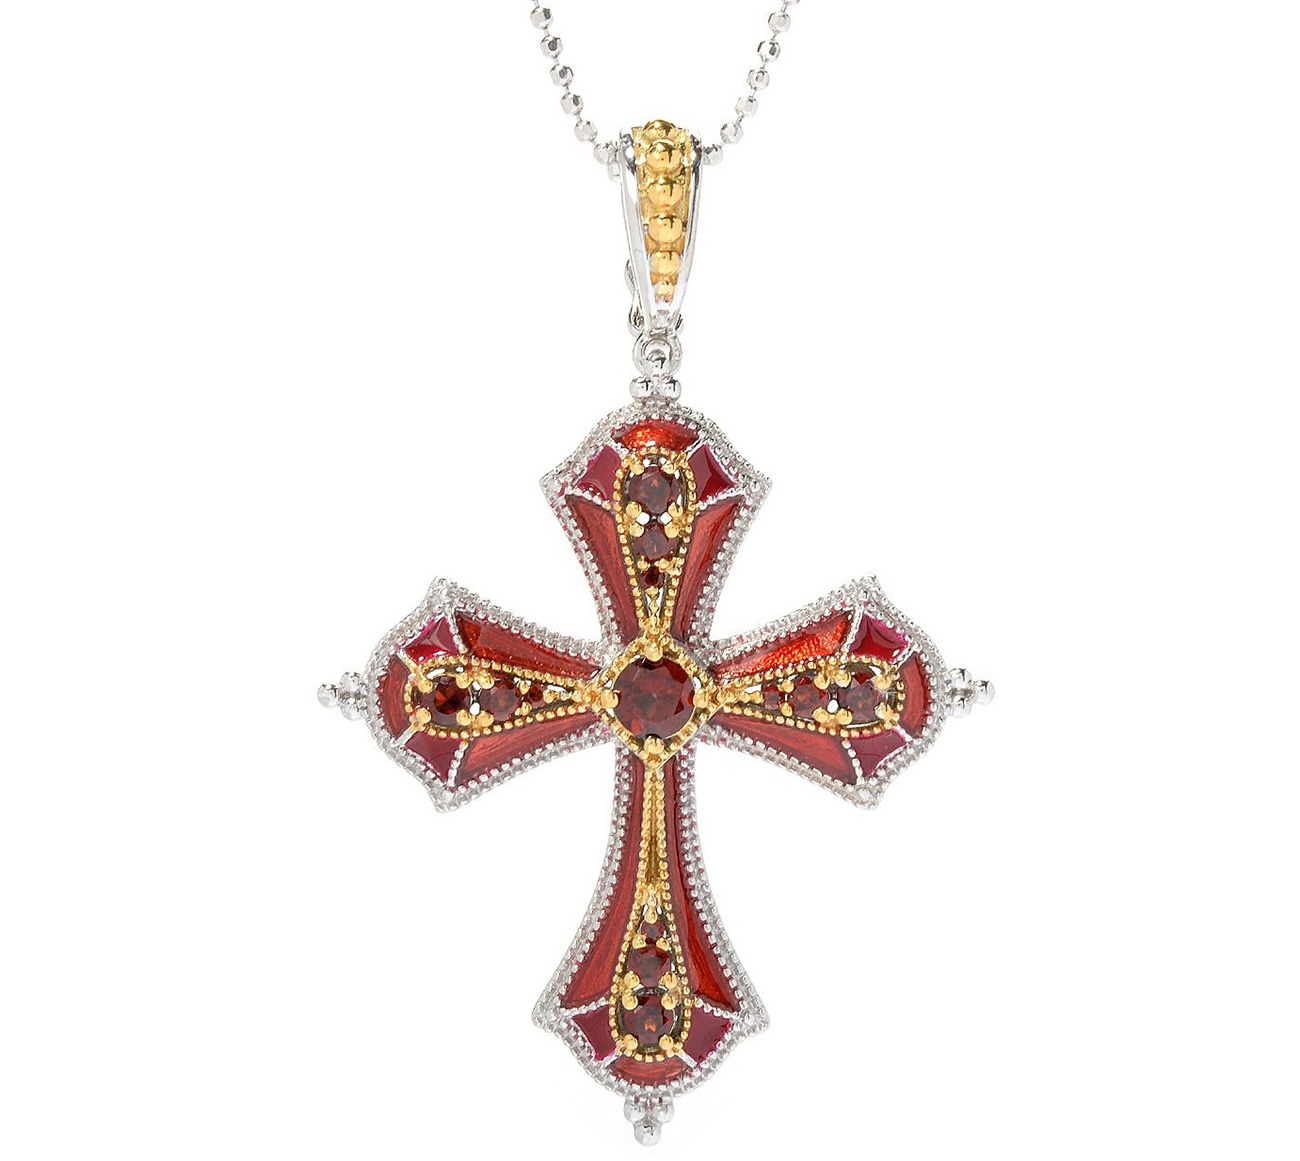 Dallas Prince garnet etruscan cross pendant